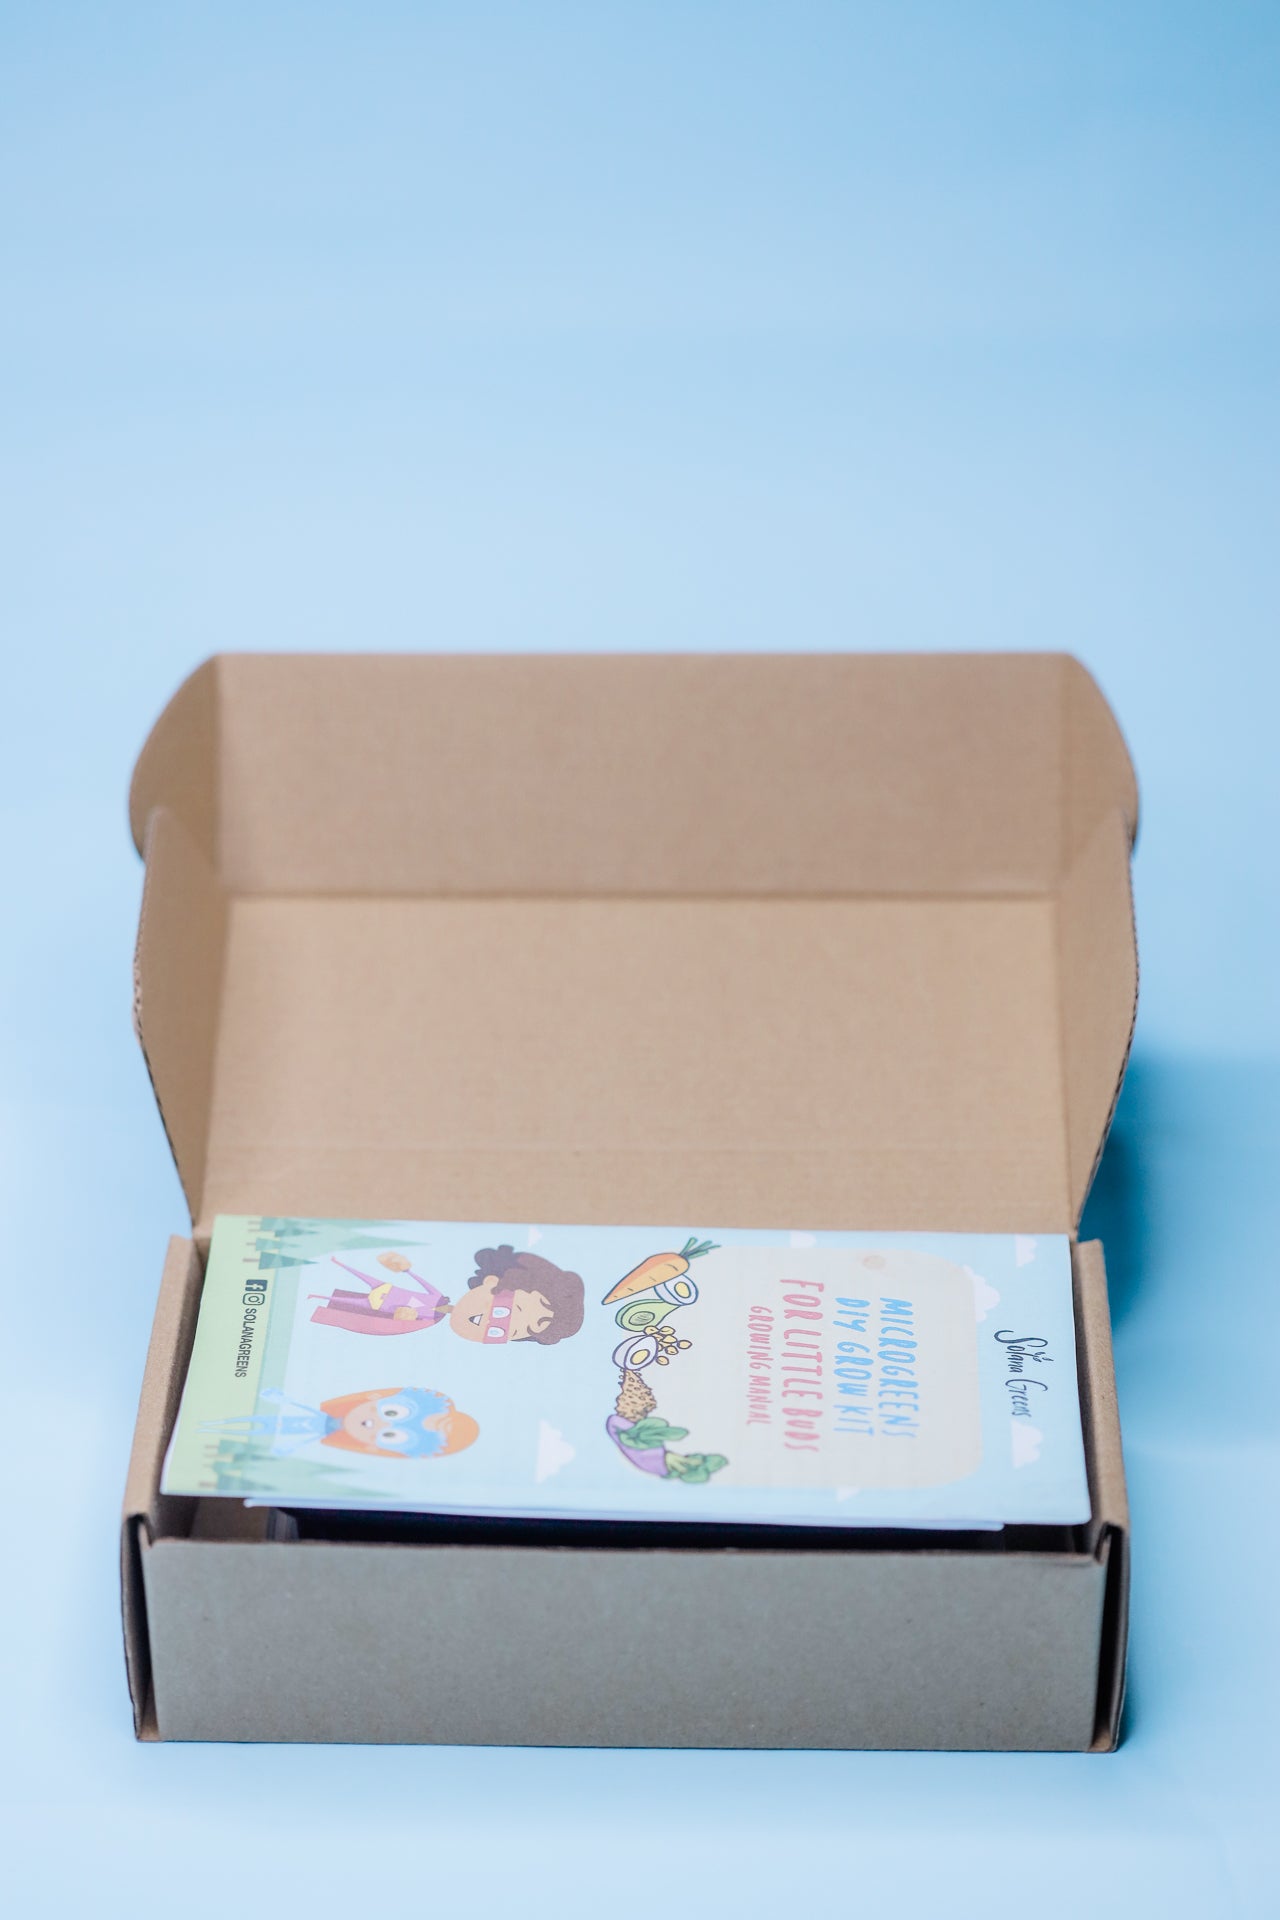 Solana Greens - Grow Kits for Kids Version 2 (4797205544994)